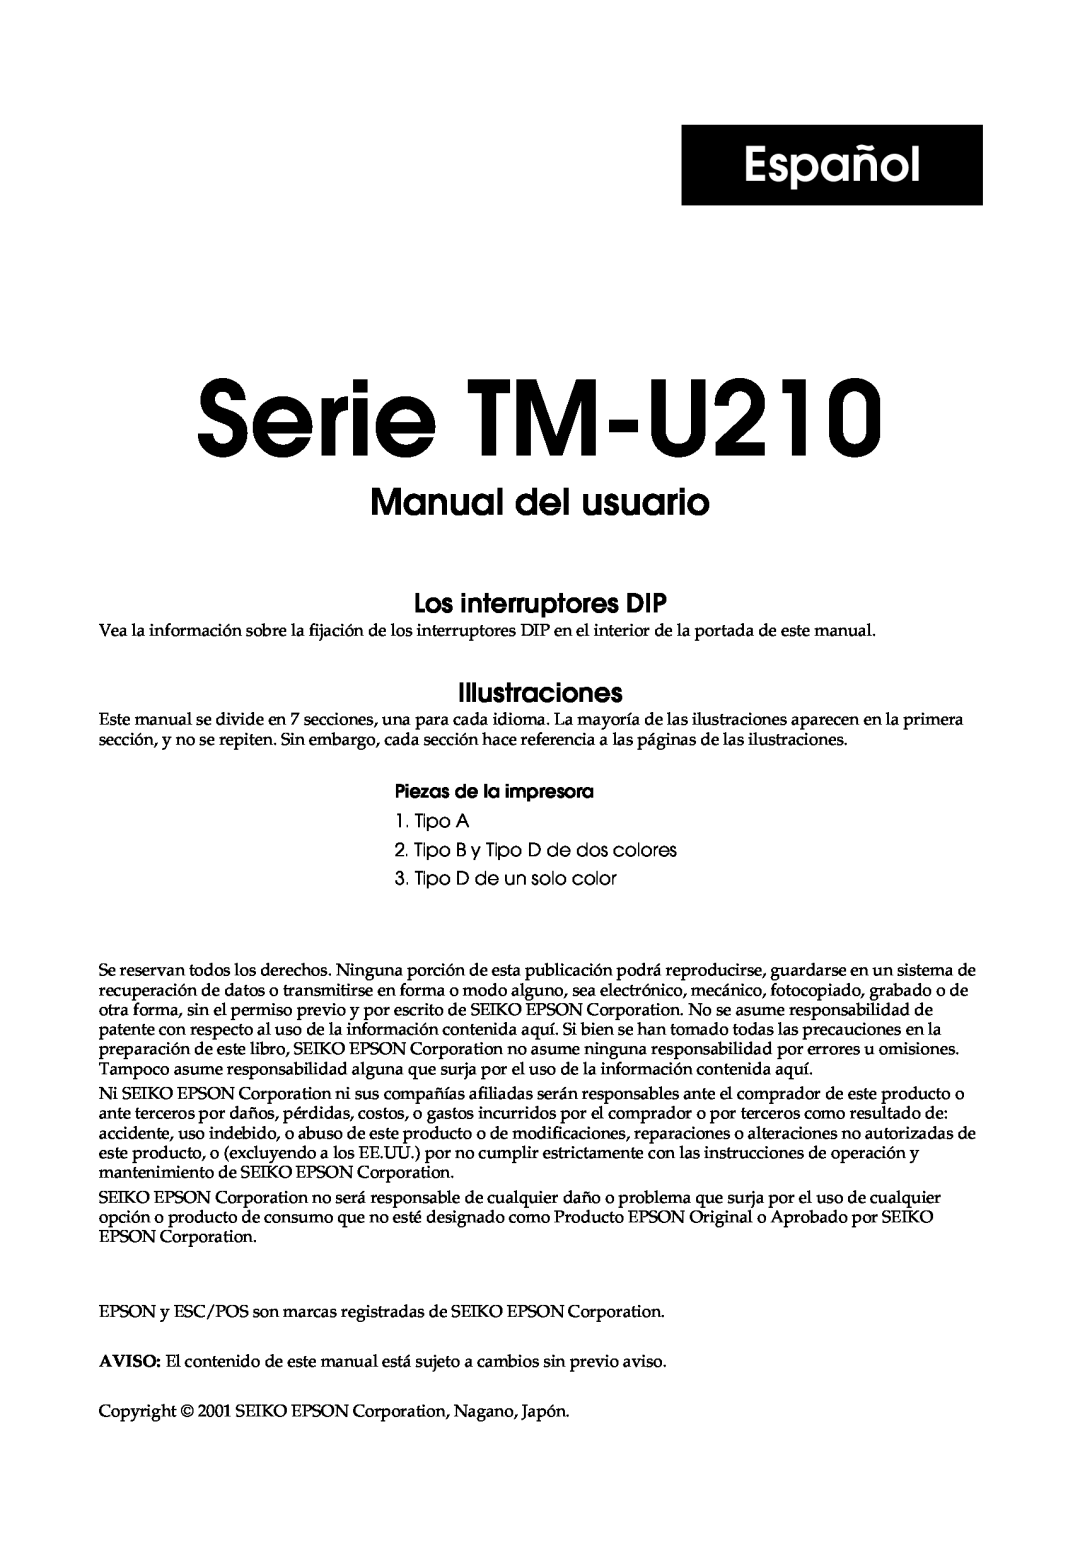 Epson TM-U210 Series, M119B, M119D Español, Manual del usuario del Serie TM-U210, Los interruptores DIP, Illustraciones 